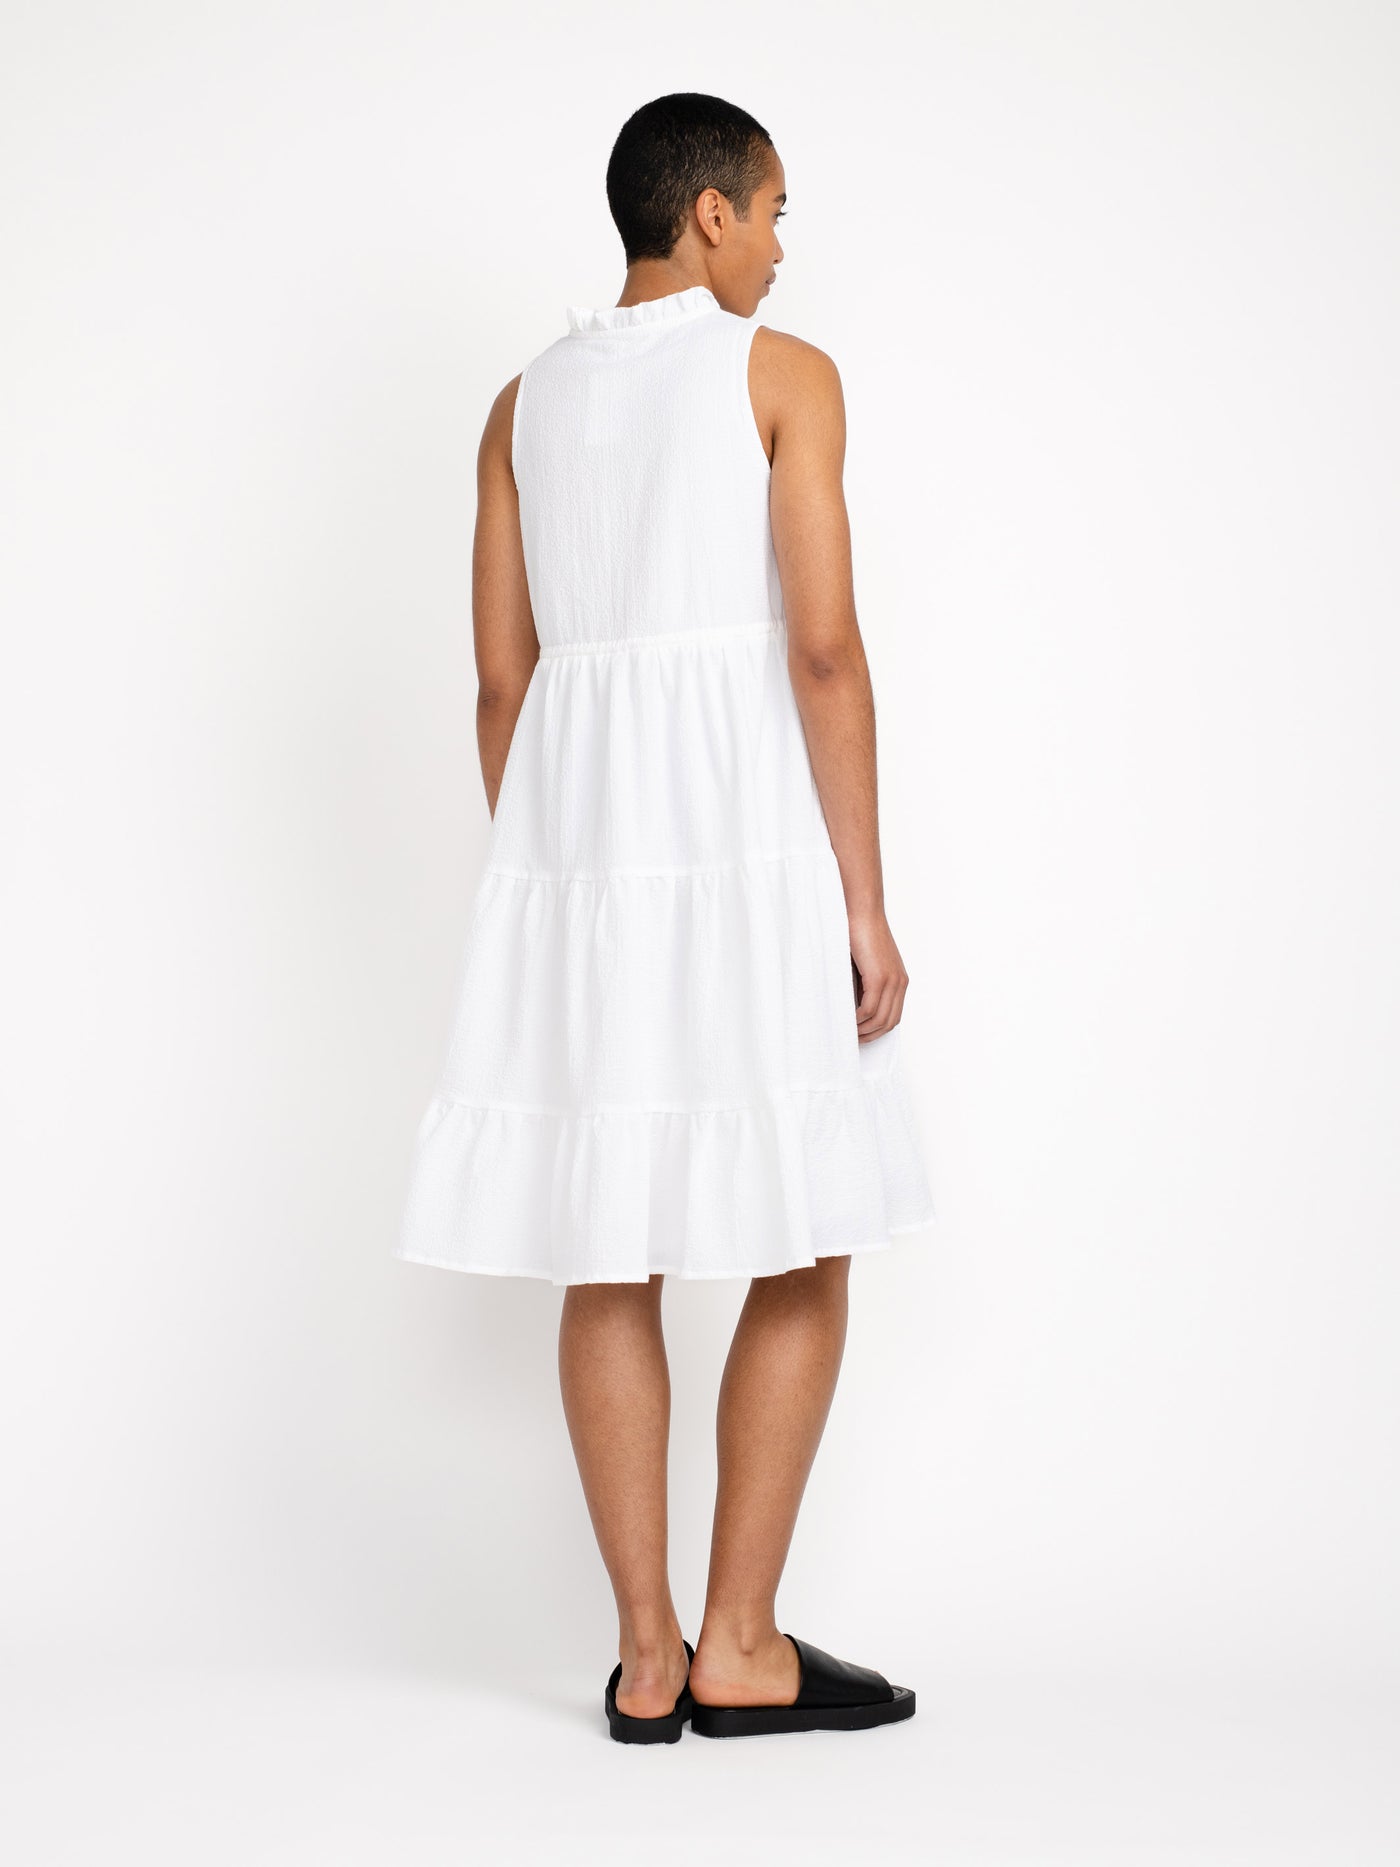 Edith dress, white